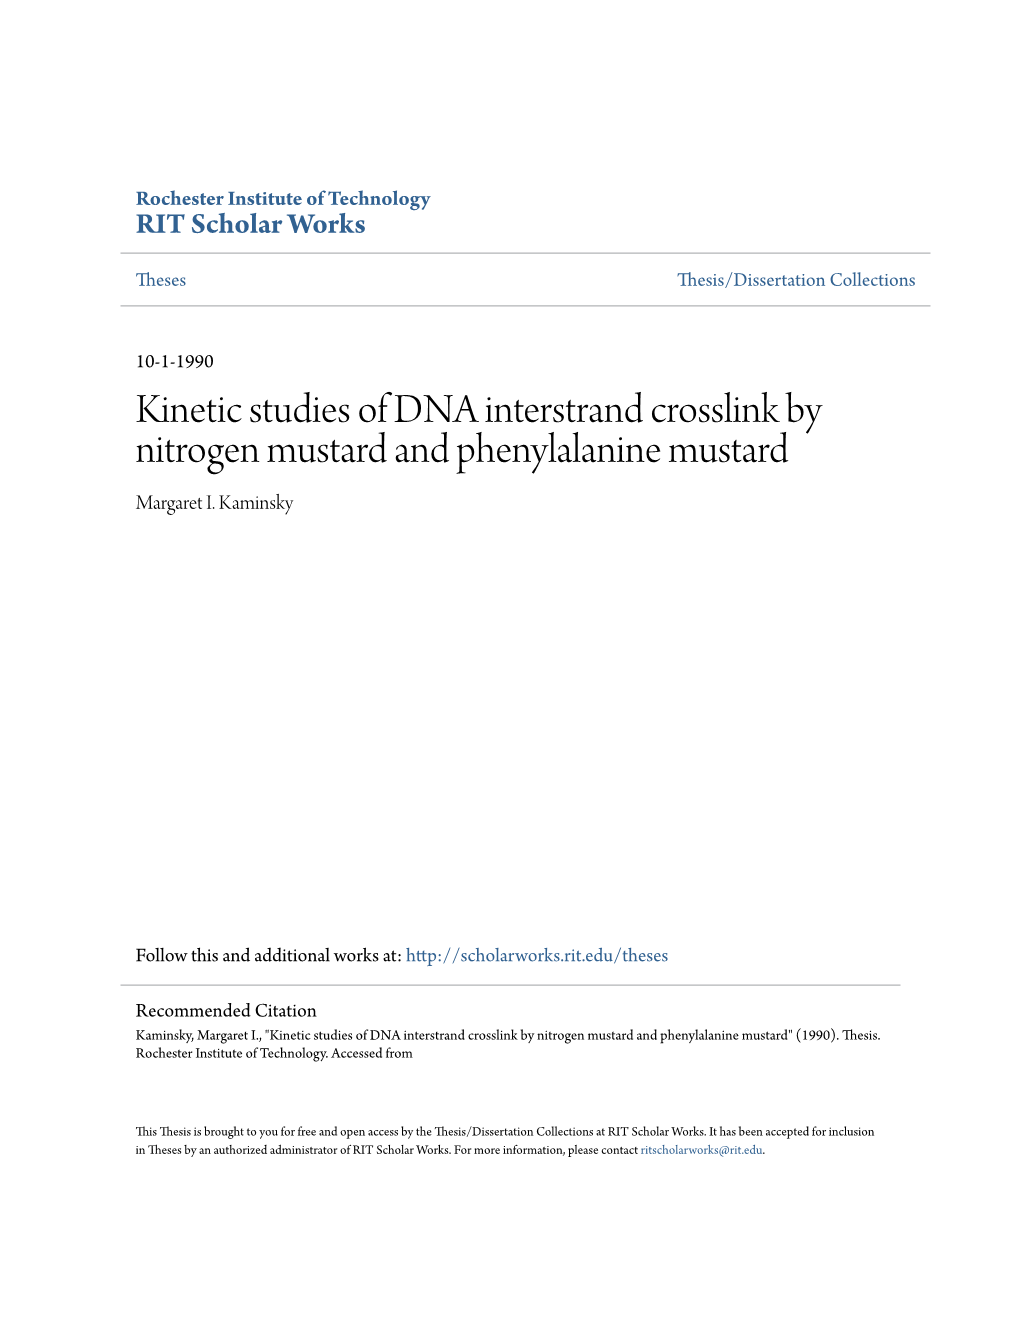 Kinetic Studies of DNA Interstrand Crosslink by Nitrogen Mustard and Phenylalanine Mustard Margaret I